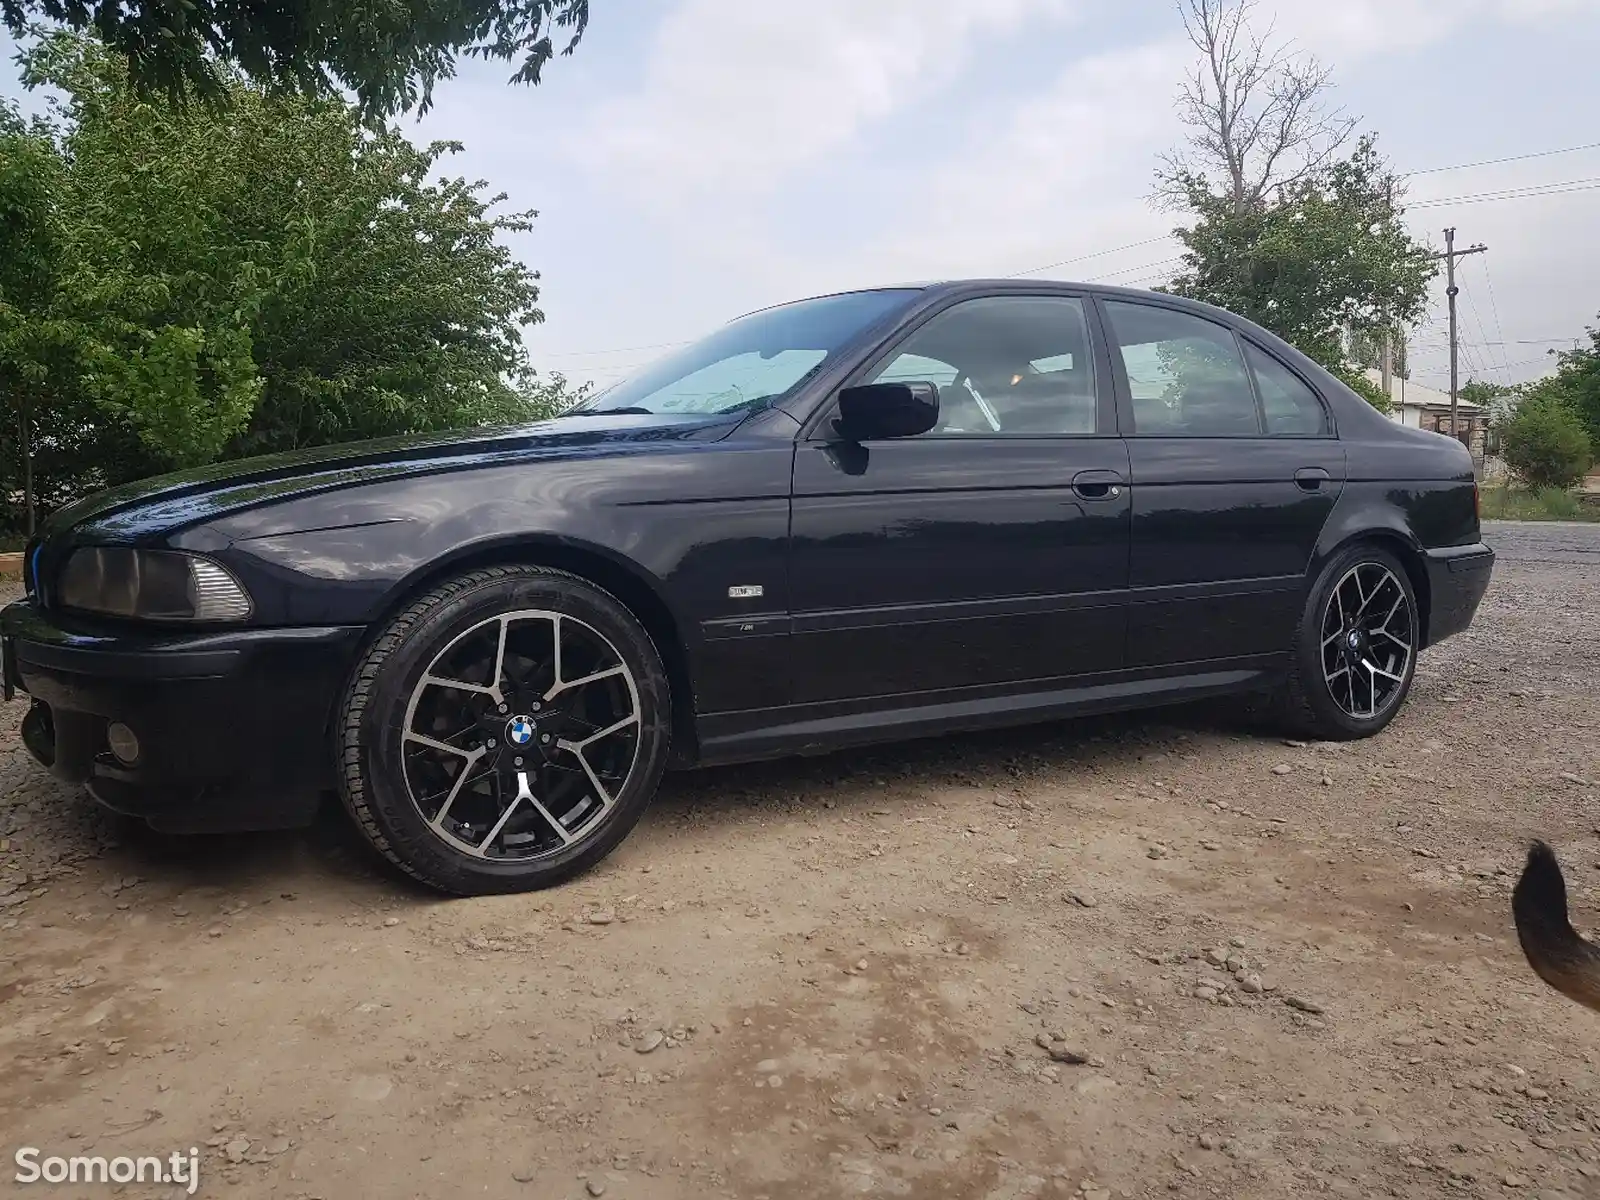 BMW 5 series, 1998-3